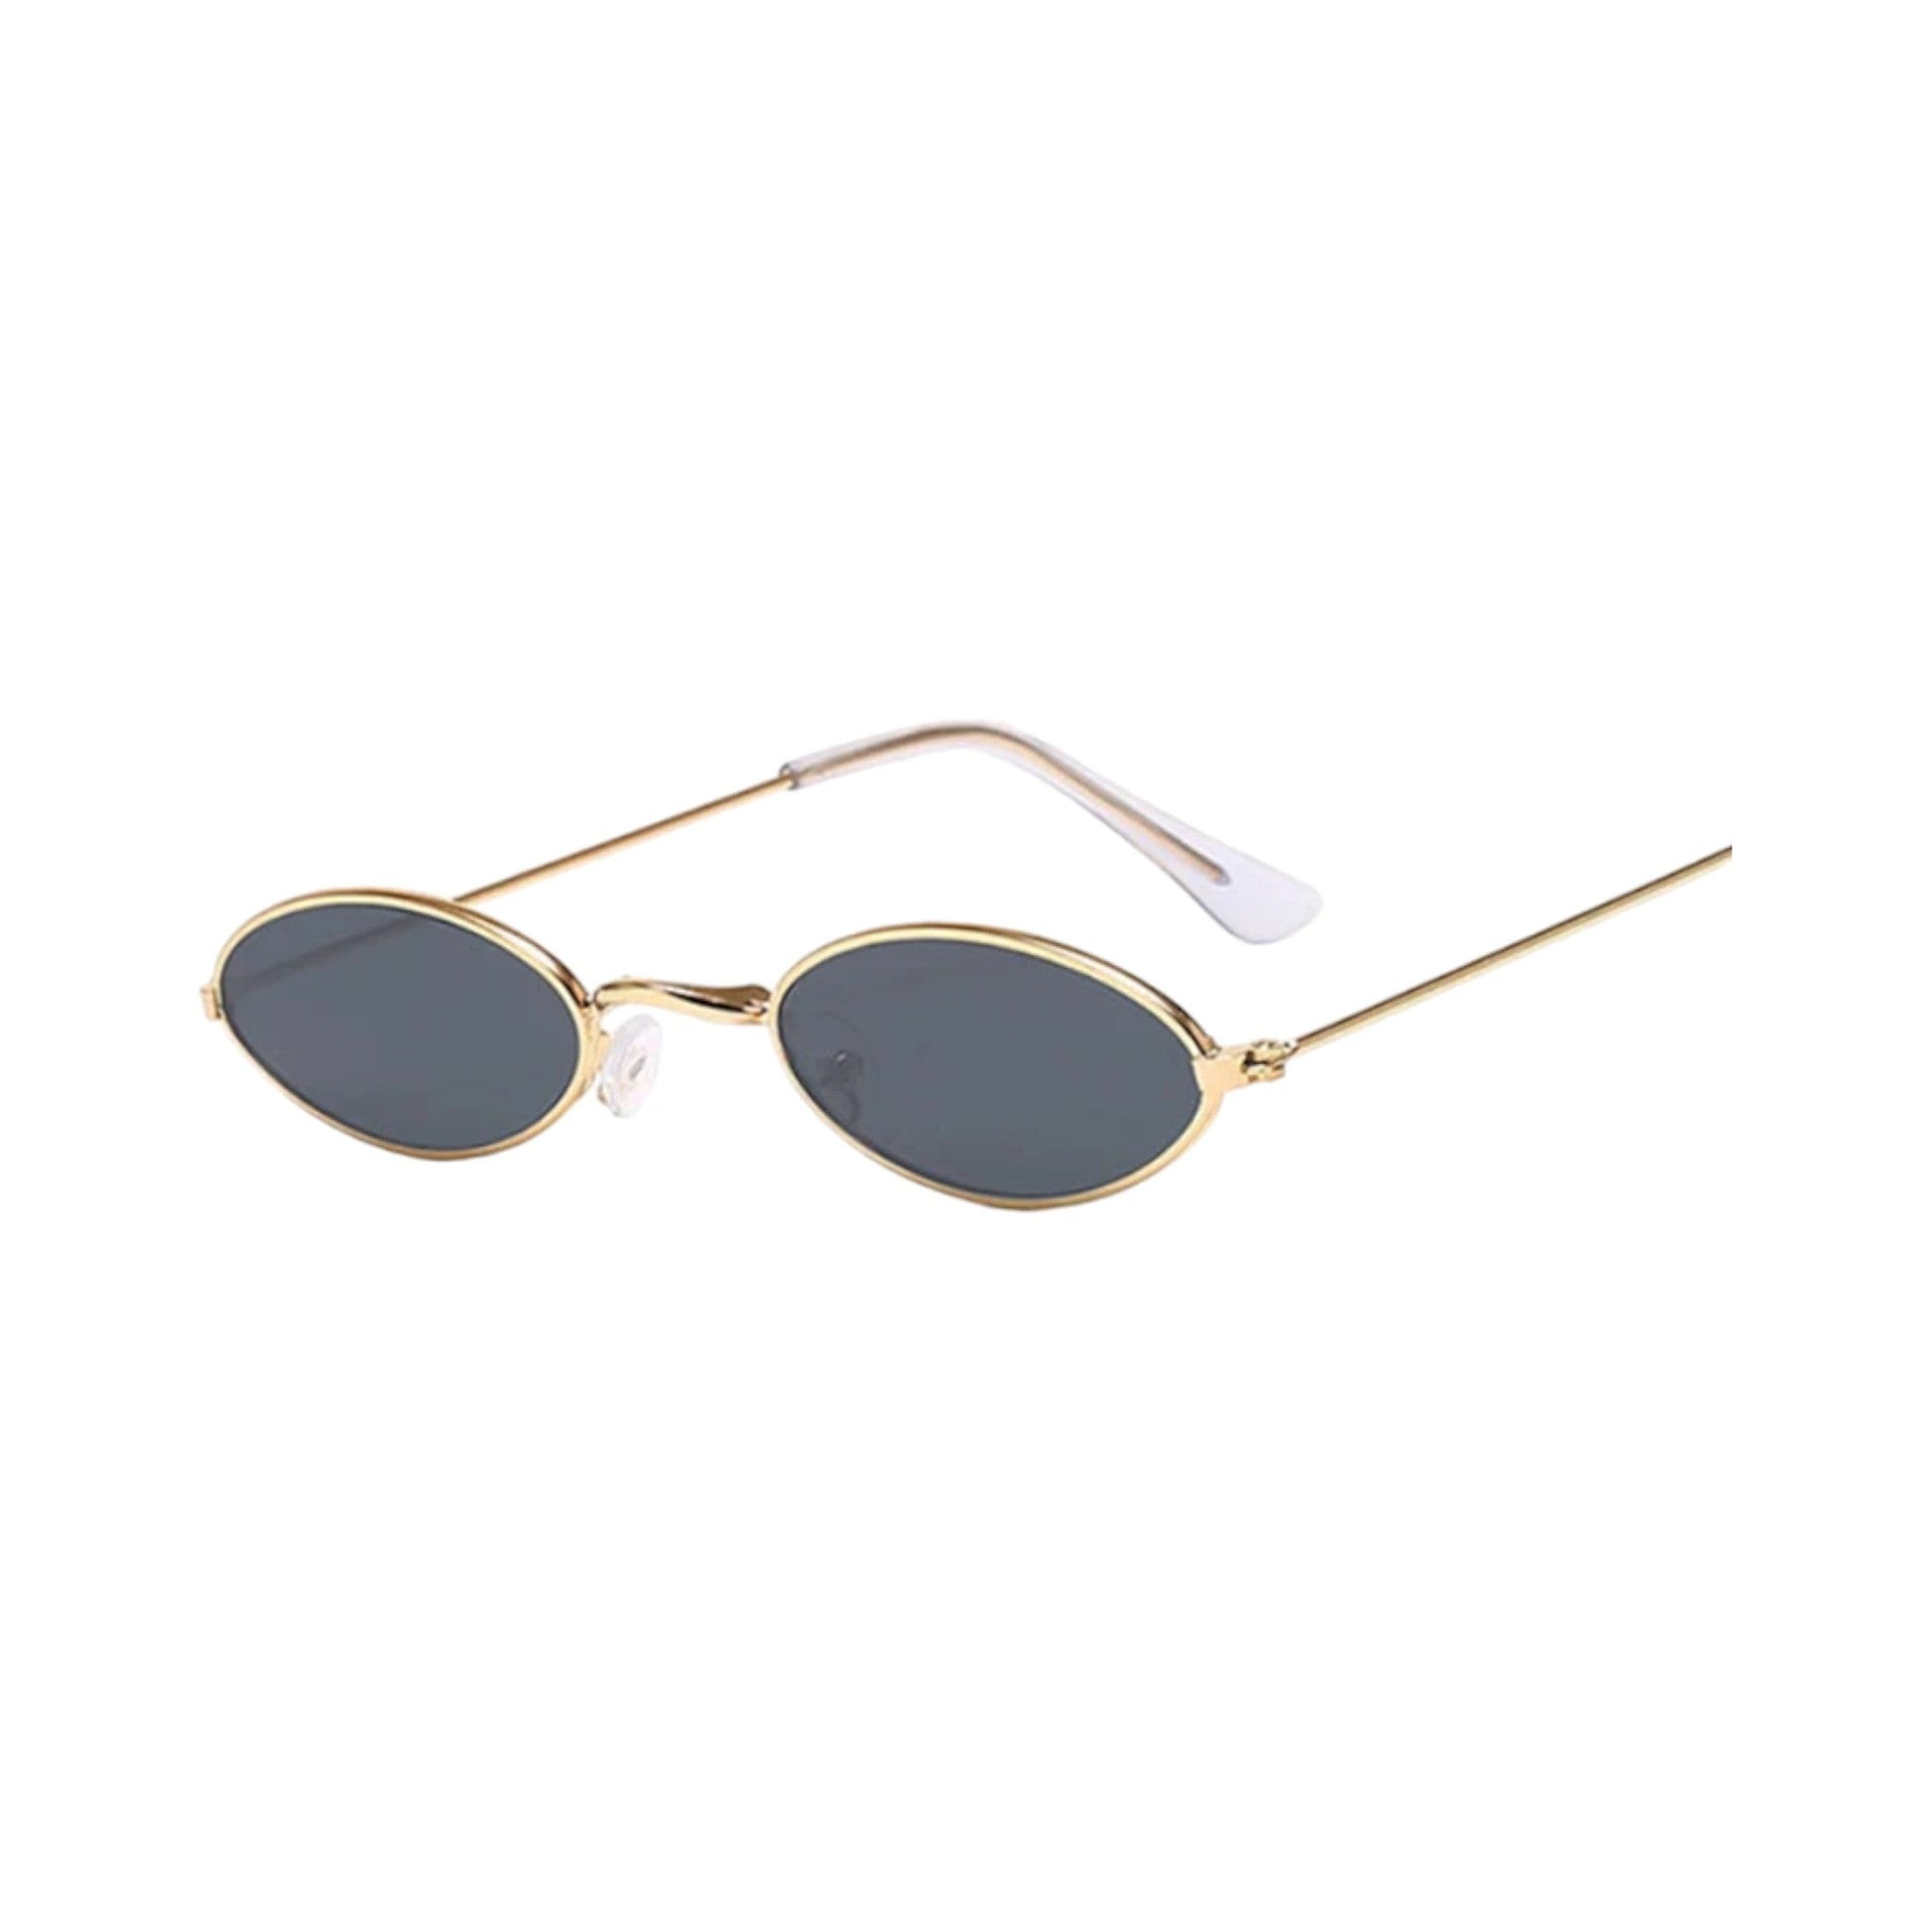 gold frame gray lens Unisex Oval Sunglasses Cannes